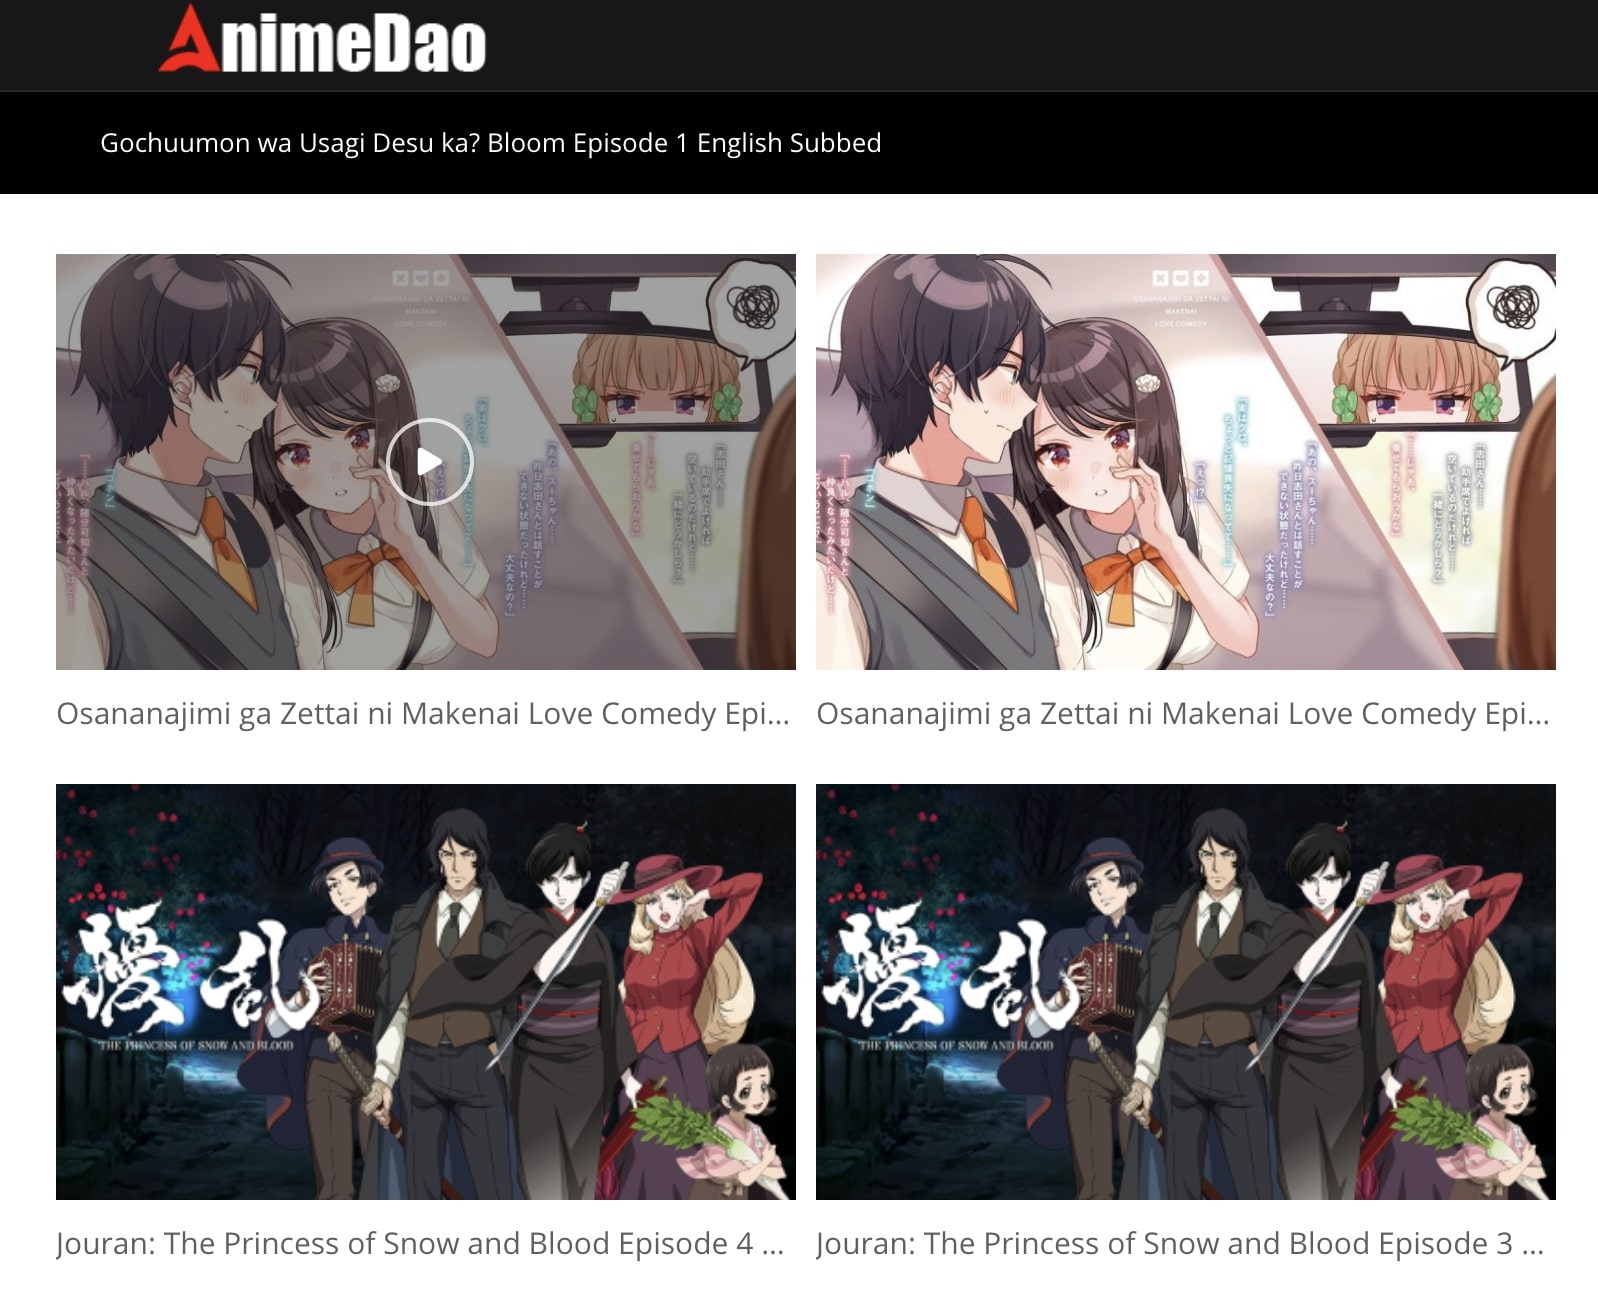 high-school-romance-anime-animedao  